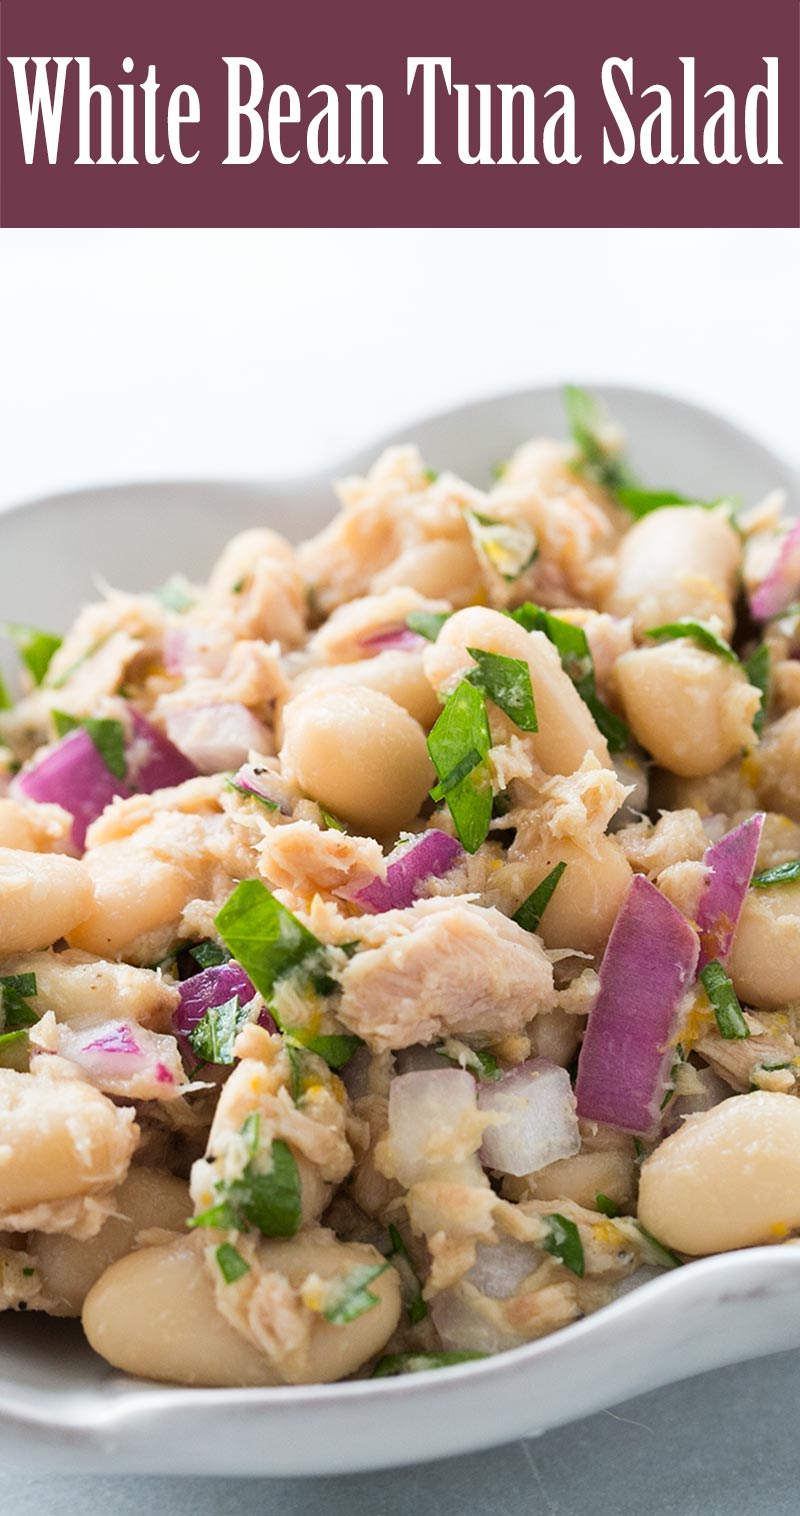 White Bean and Tuna Salad Recipe | SimplyRecipes.com -   18 healthy recipes Tuna white beans ideas